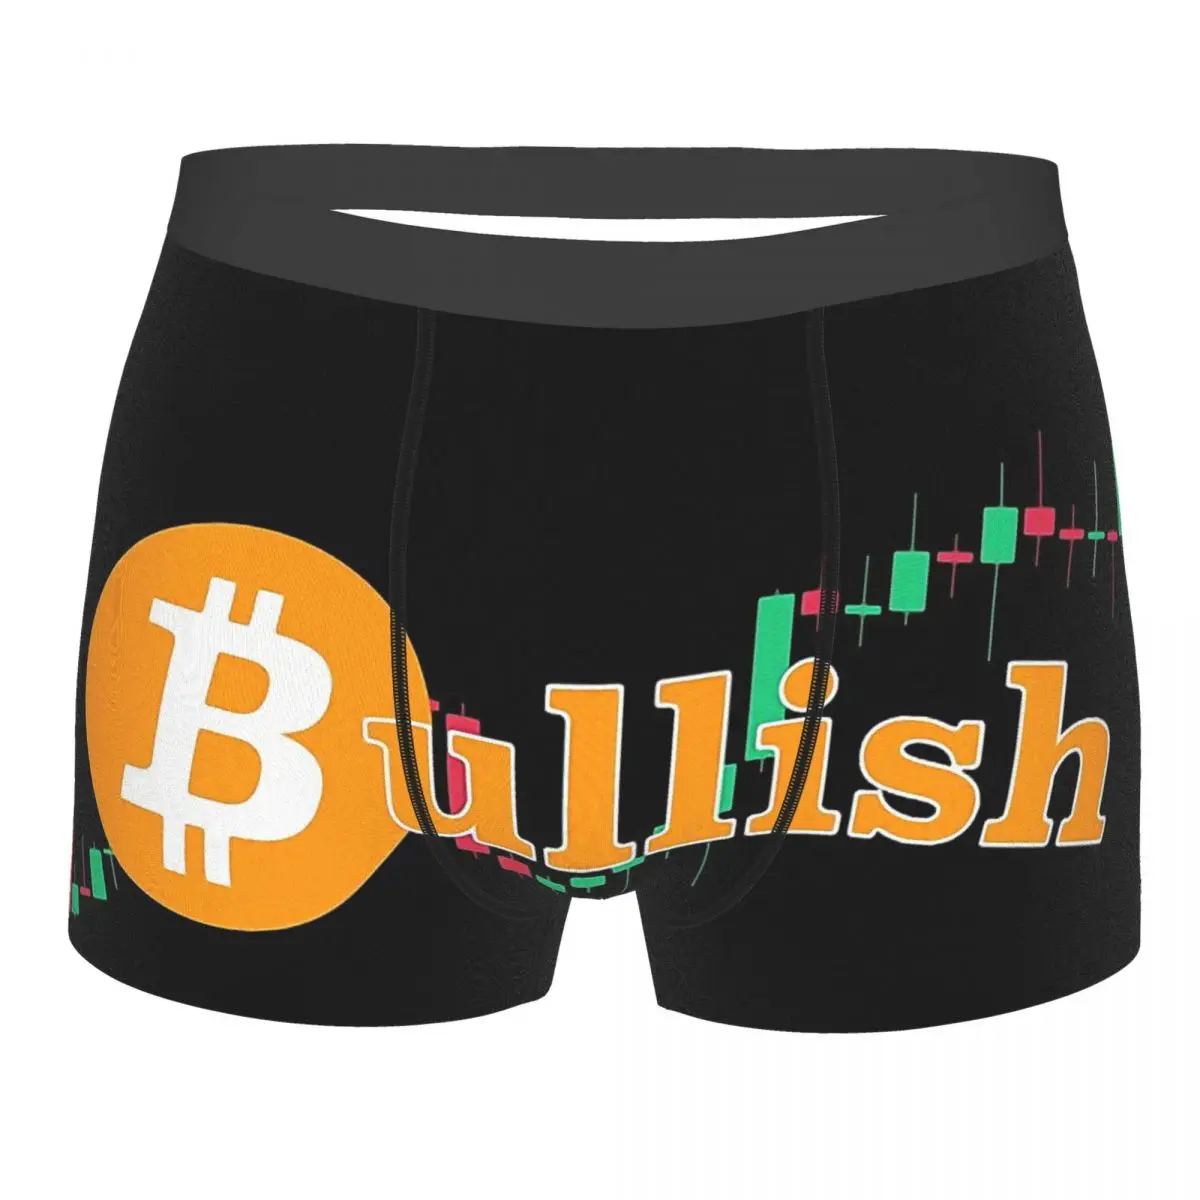 

Bullish Range Bitcoin Cryptocurrency Miners Meme Underpants Homme Panties Male Underwear Ventilate Shorts Boxer Briefs